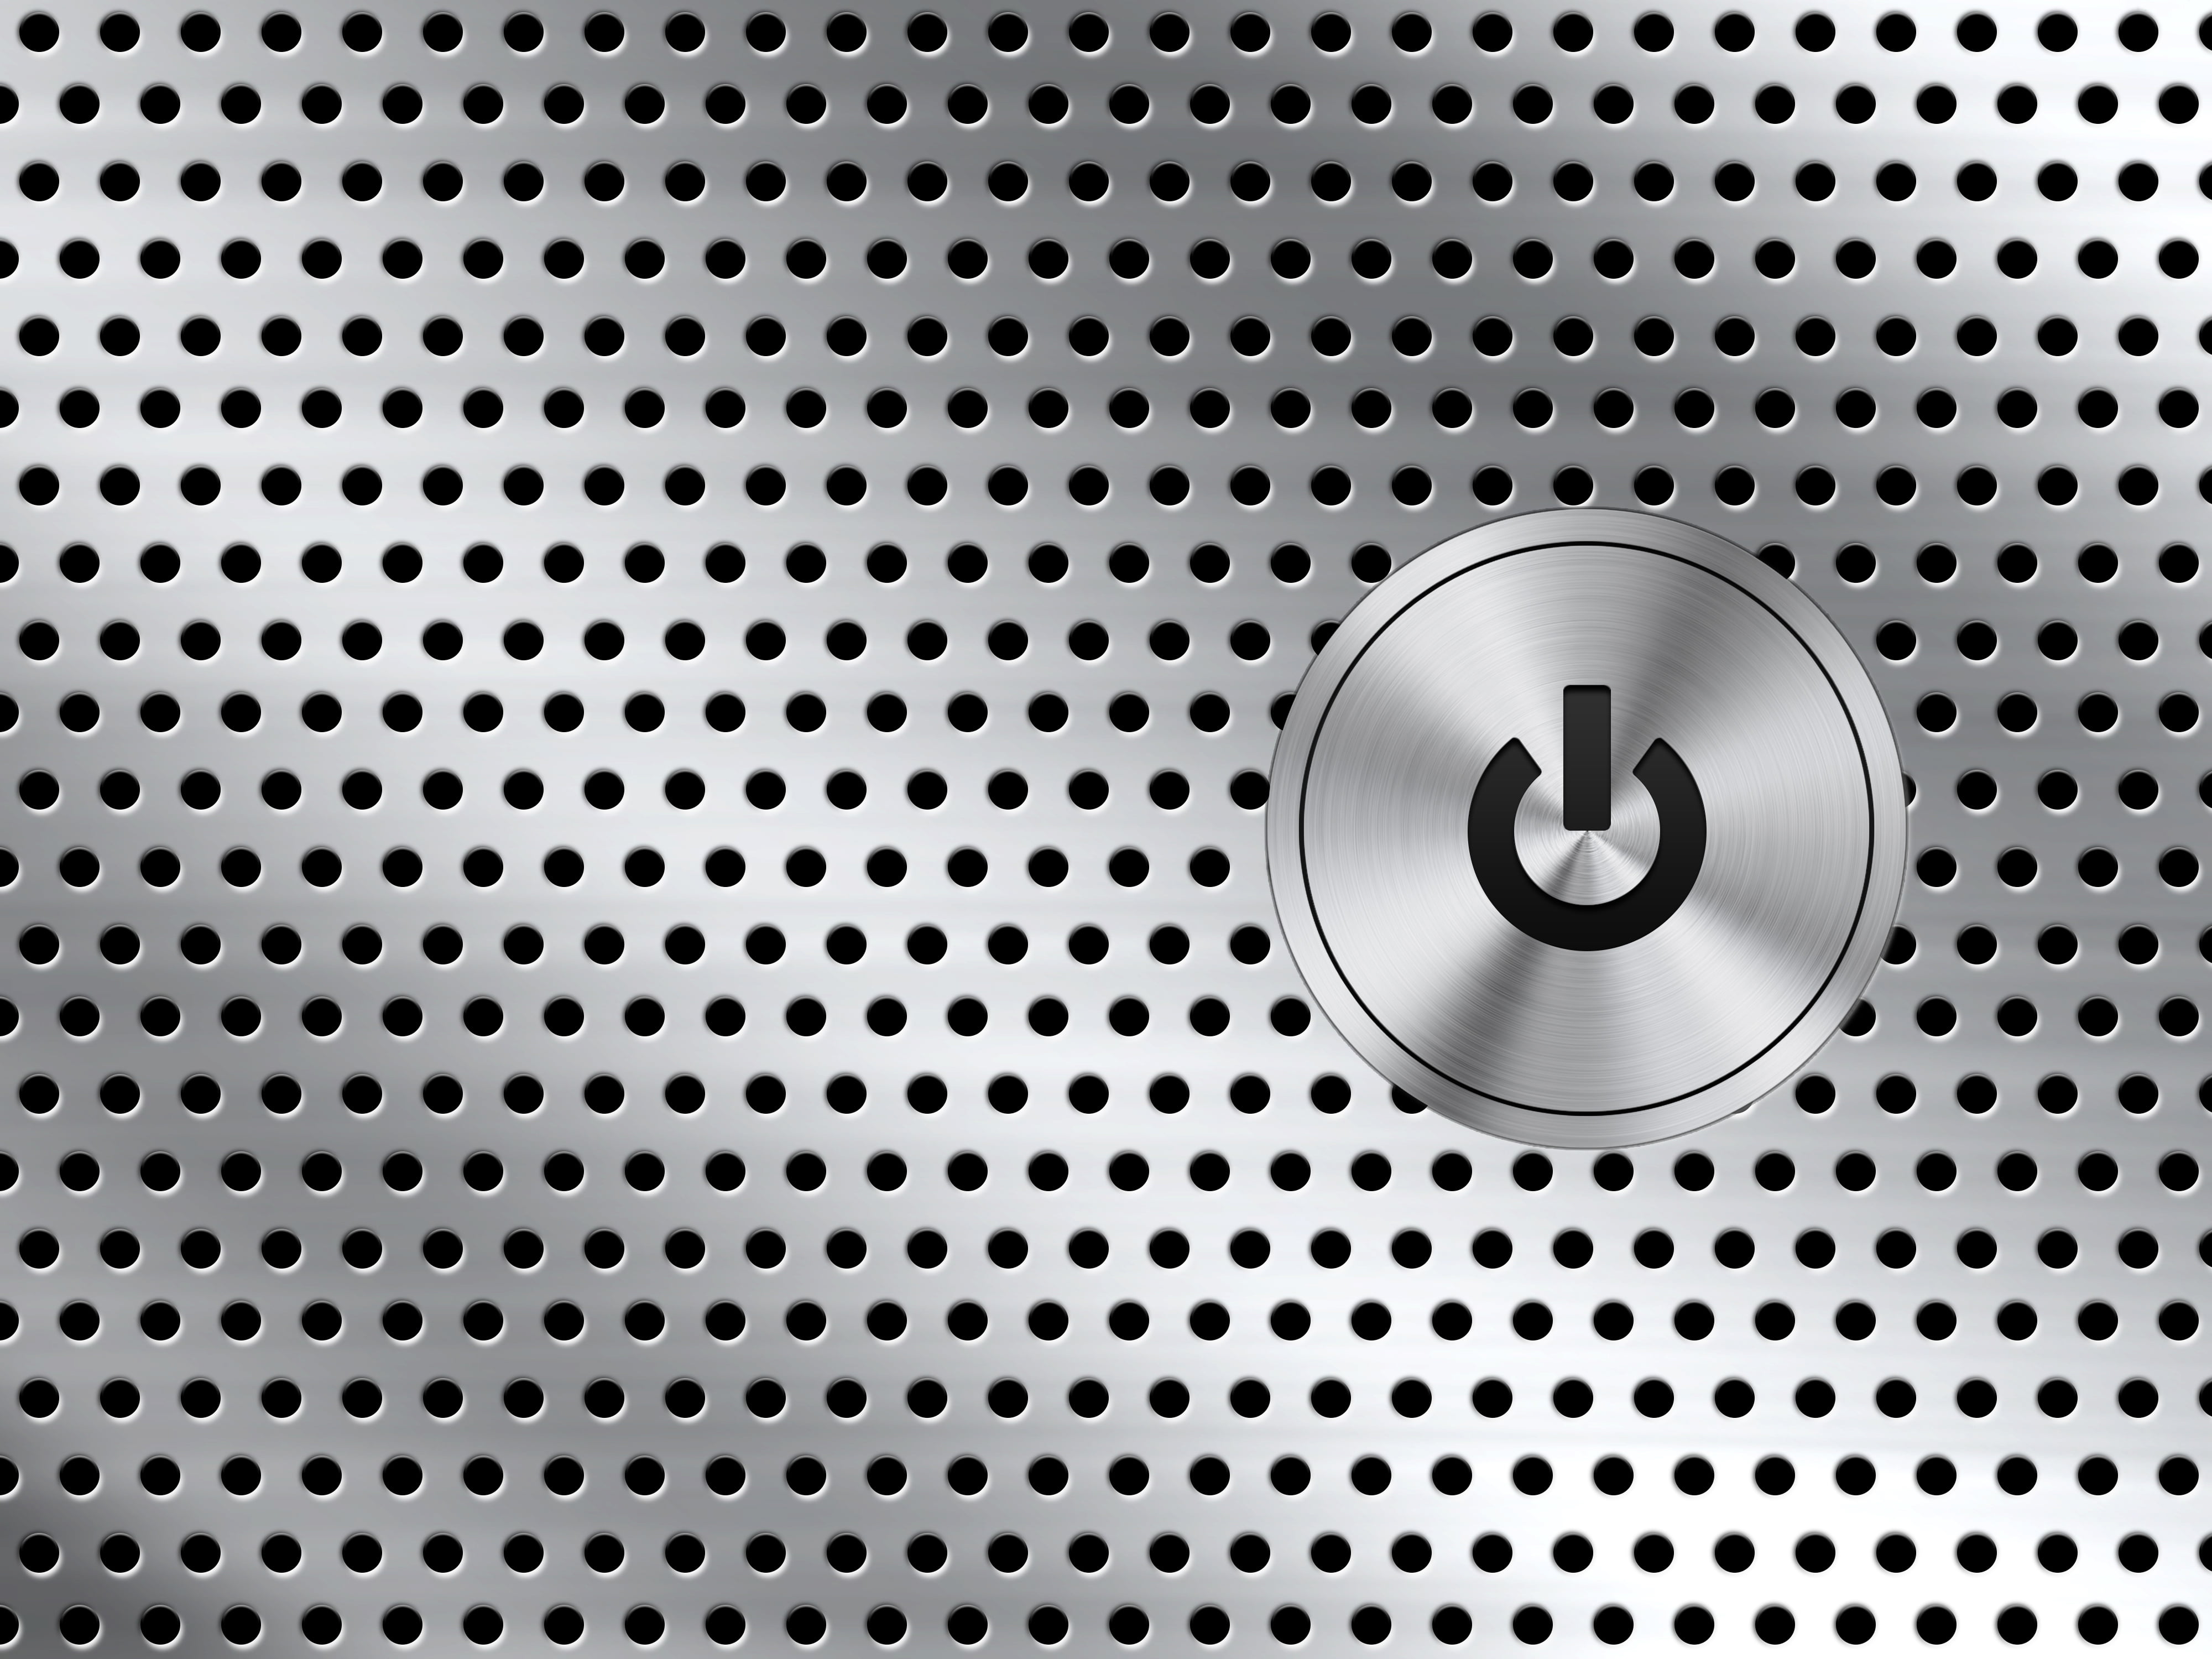 grey power button, metal, holes, metallic, steel, backgrounds